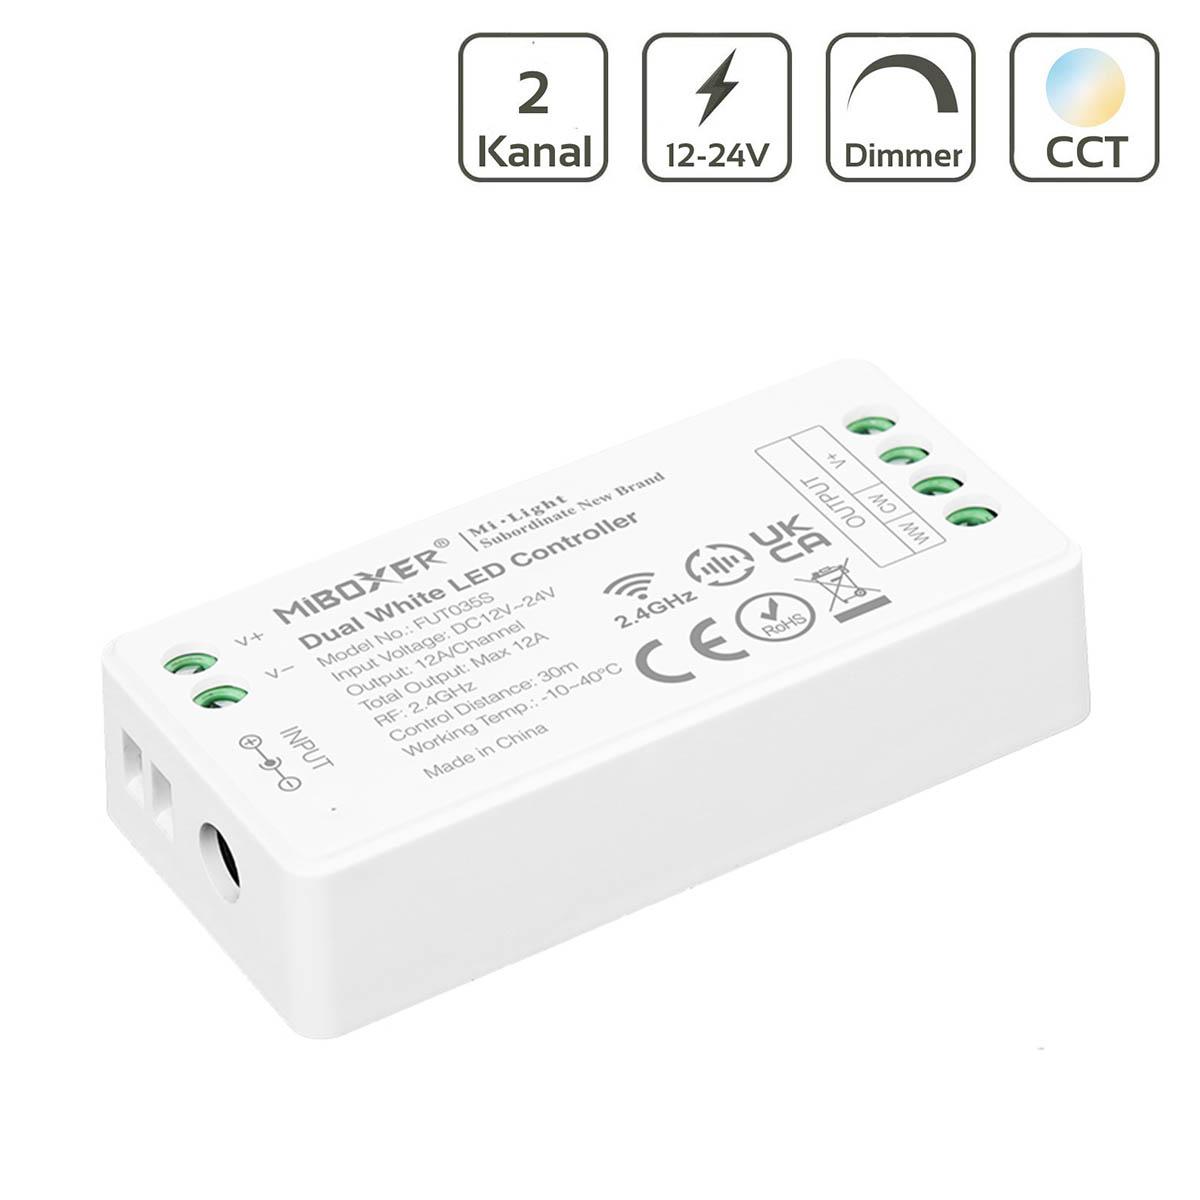 MiBoxer CCT LED Controller Mini 2 Kanal 12/24V Multifunktion LED Strip Panel Steuerung FUT035S